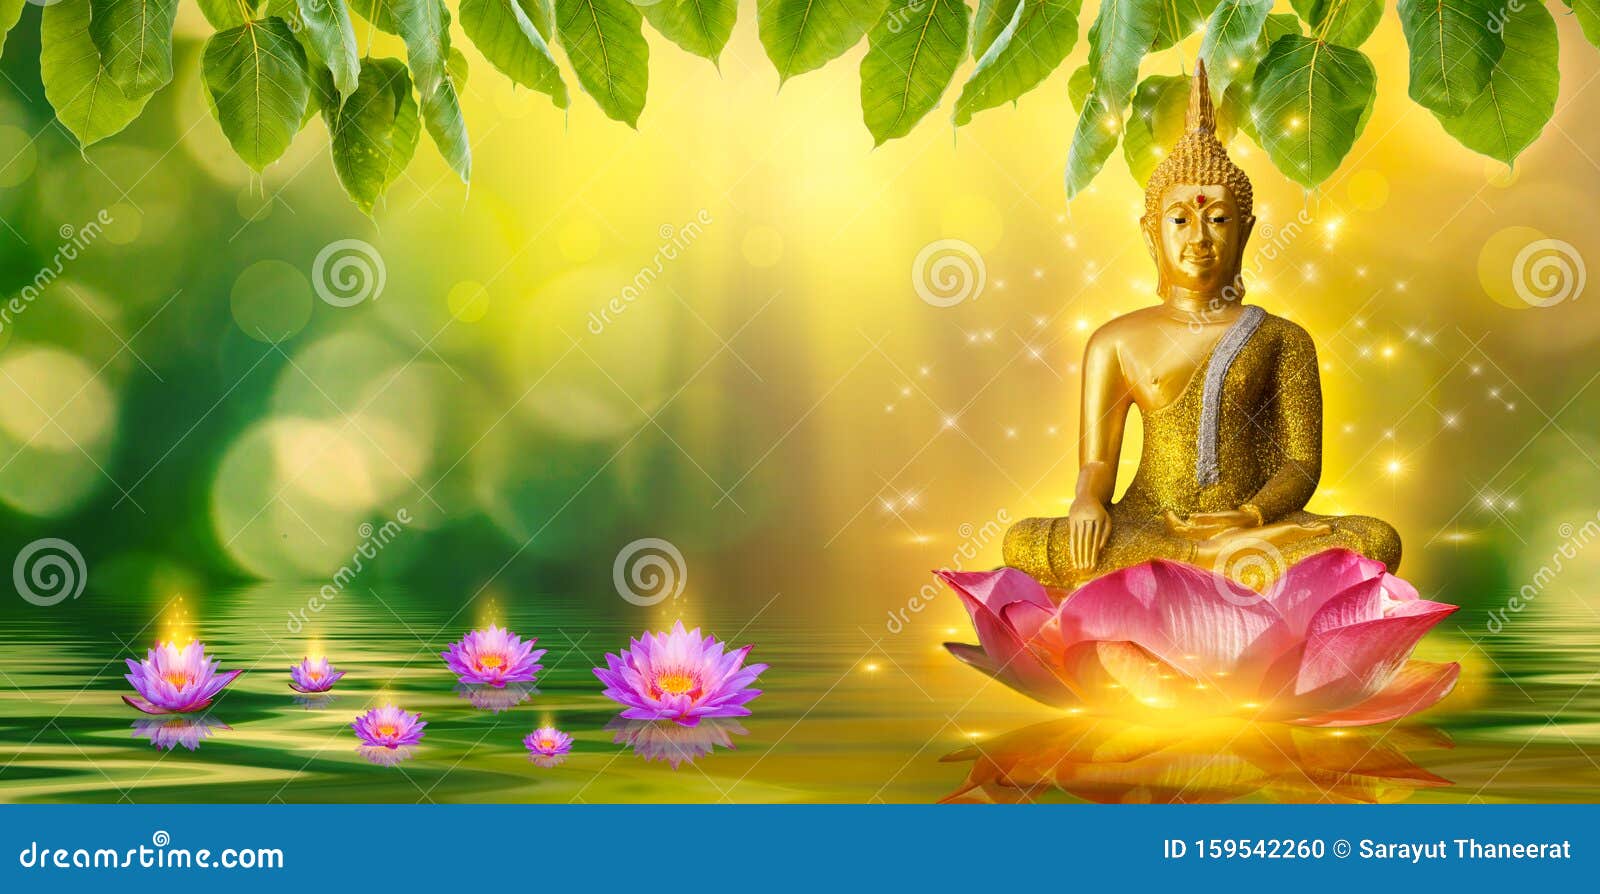 Buddha Statue Water Lotus Buddha Standing on Lotus Flower on Orange